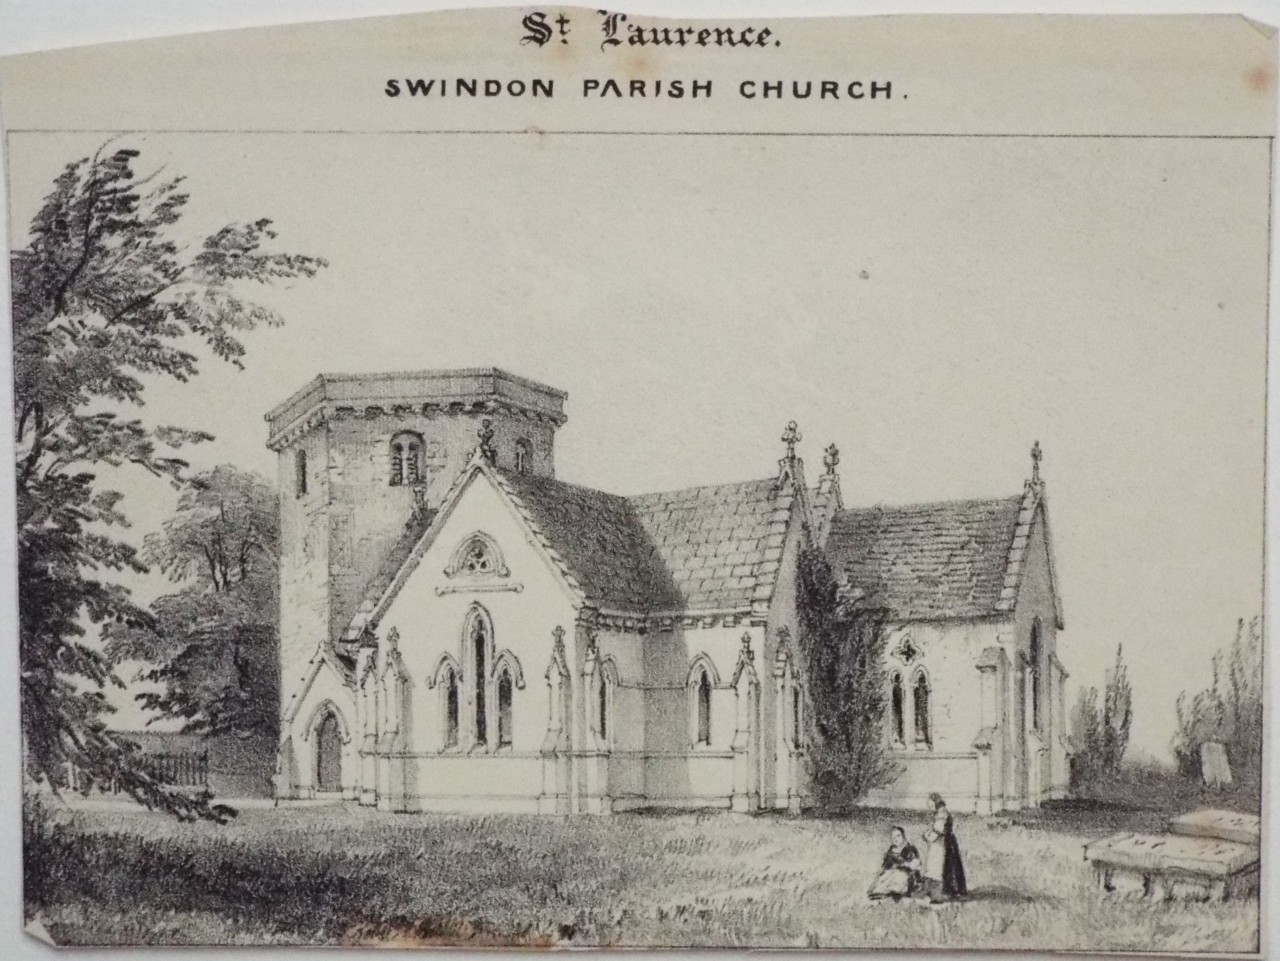 Lithograph - St. Laurence, Swindon Parish Church.